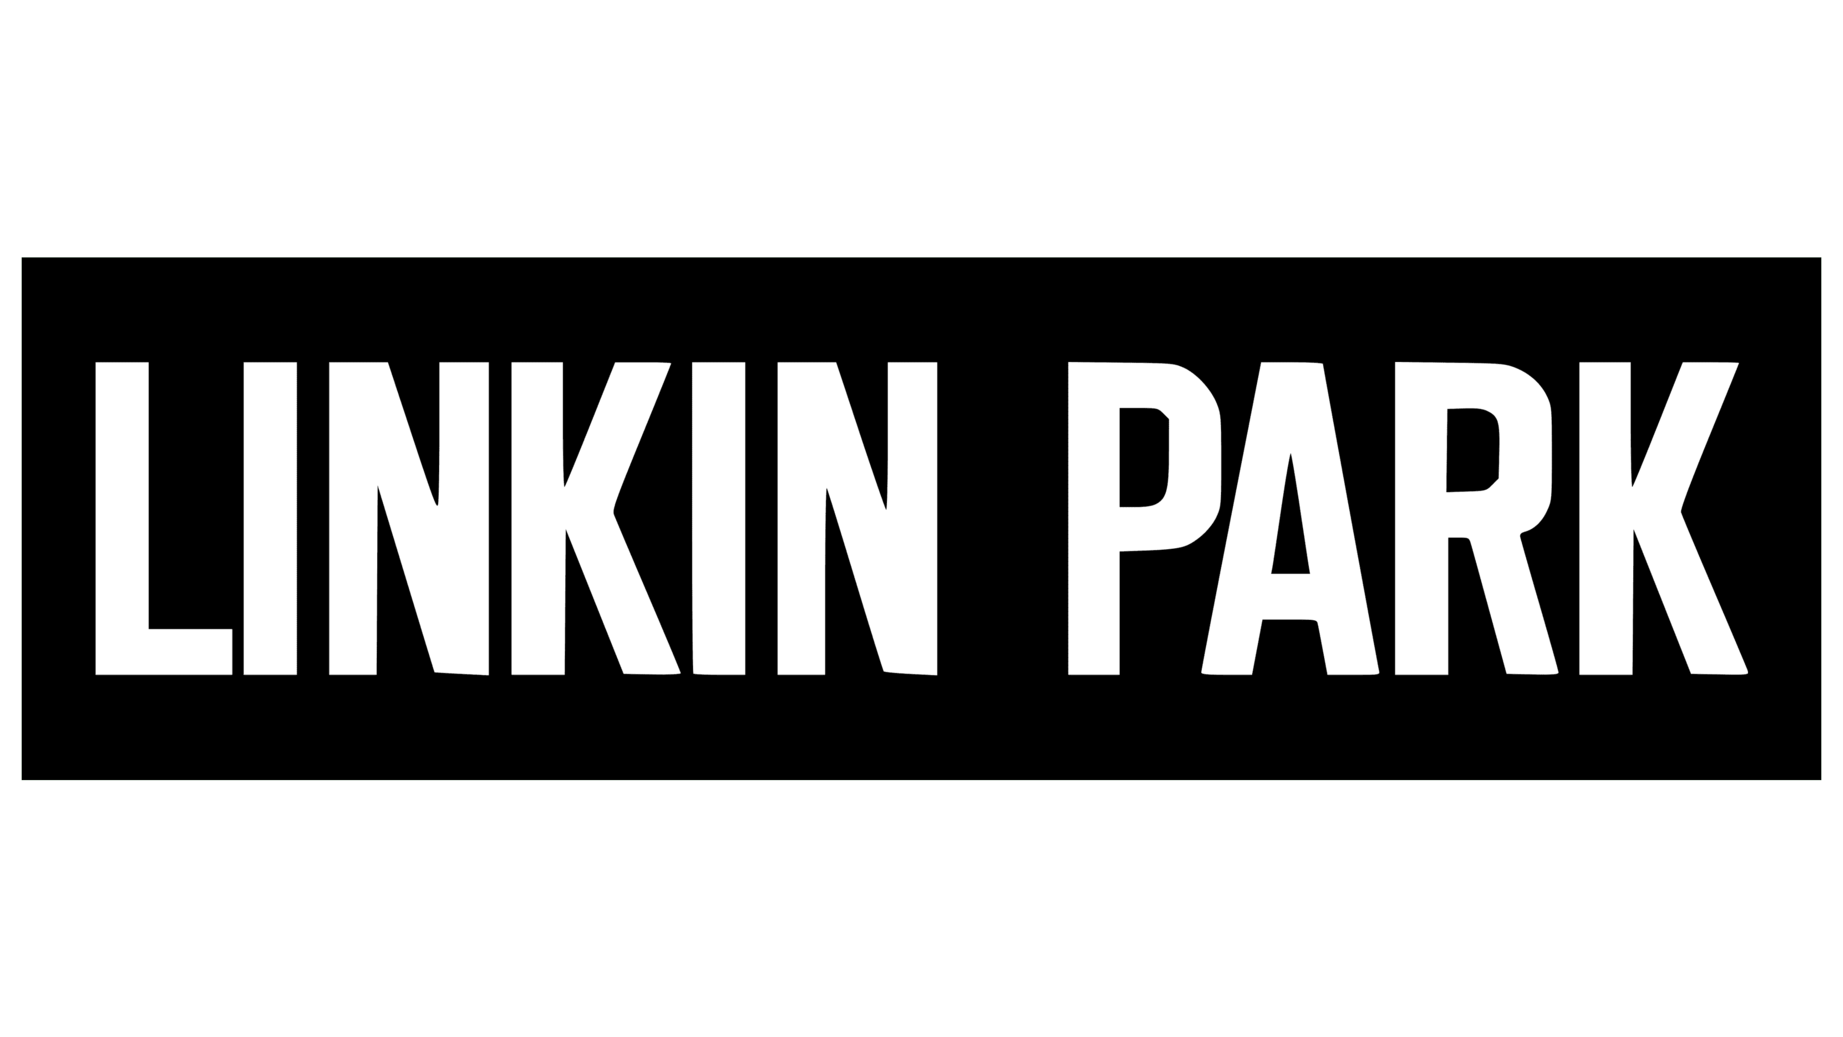 Linkin park sign